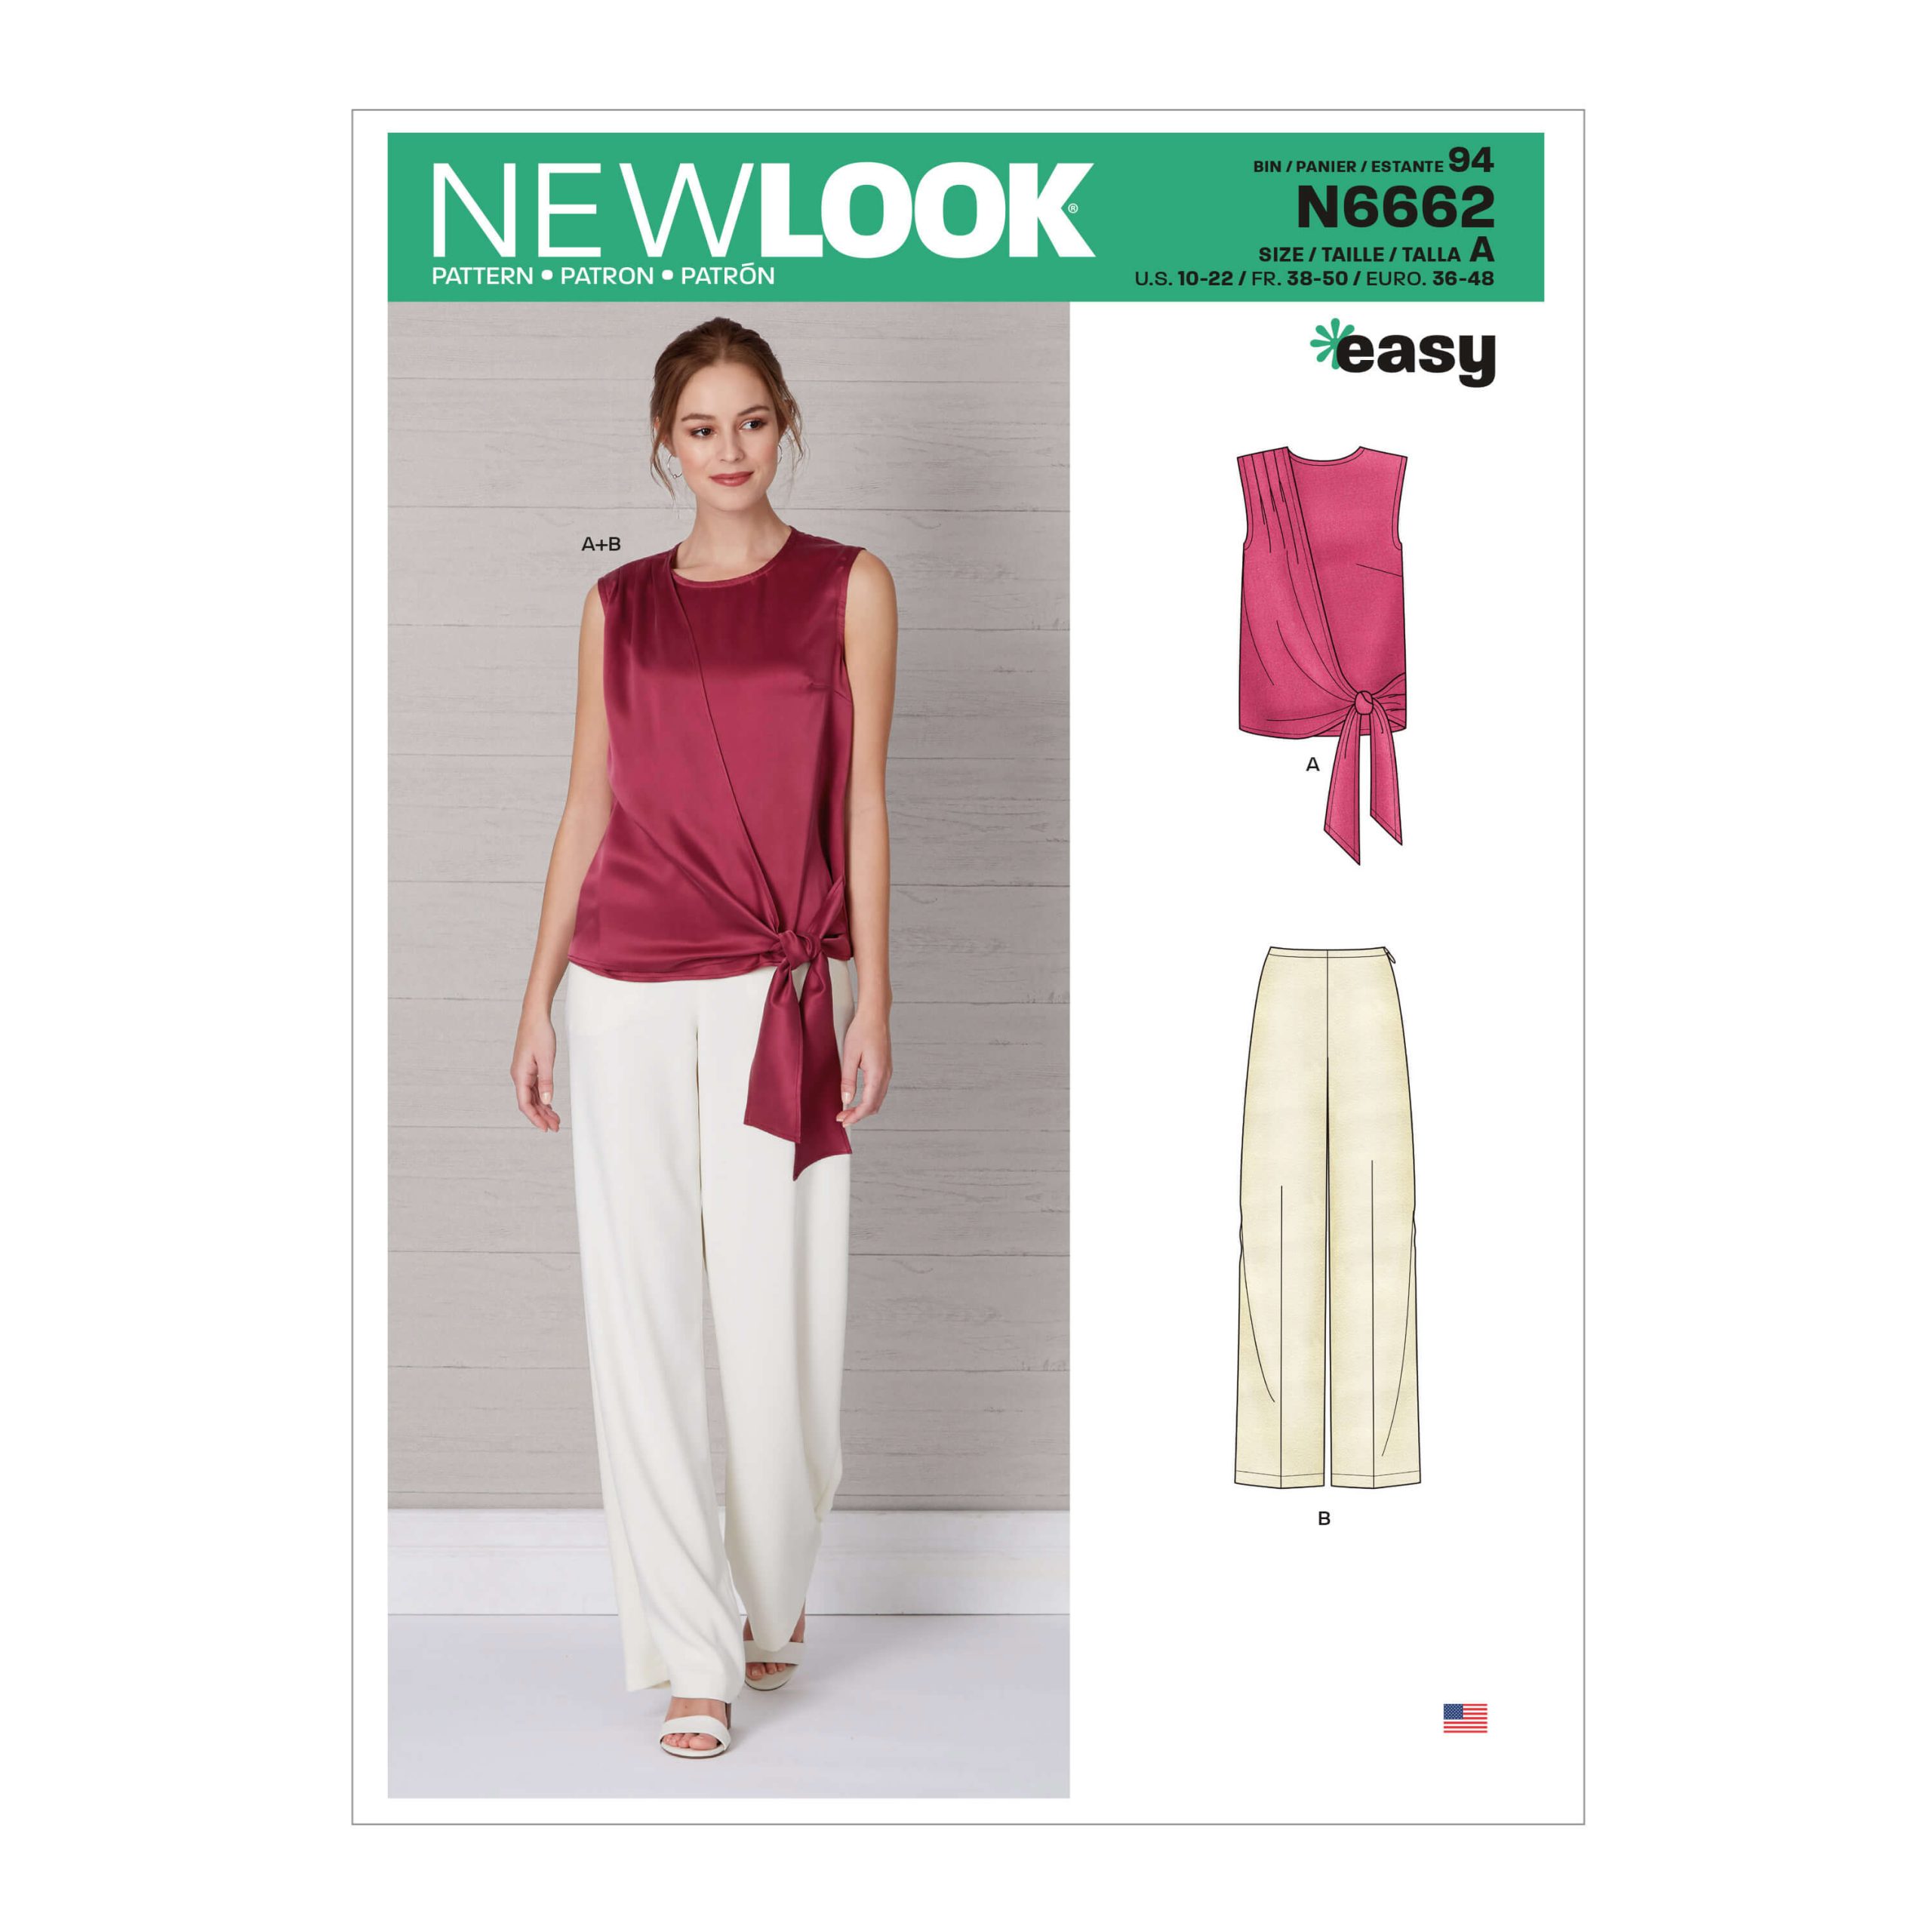 New Look Sewing Pattern N6662 Misses' Drape Top & Wide-Leg Trousers